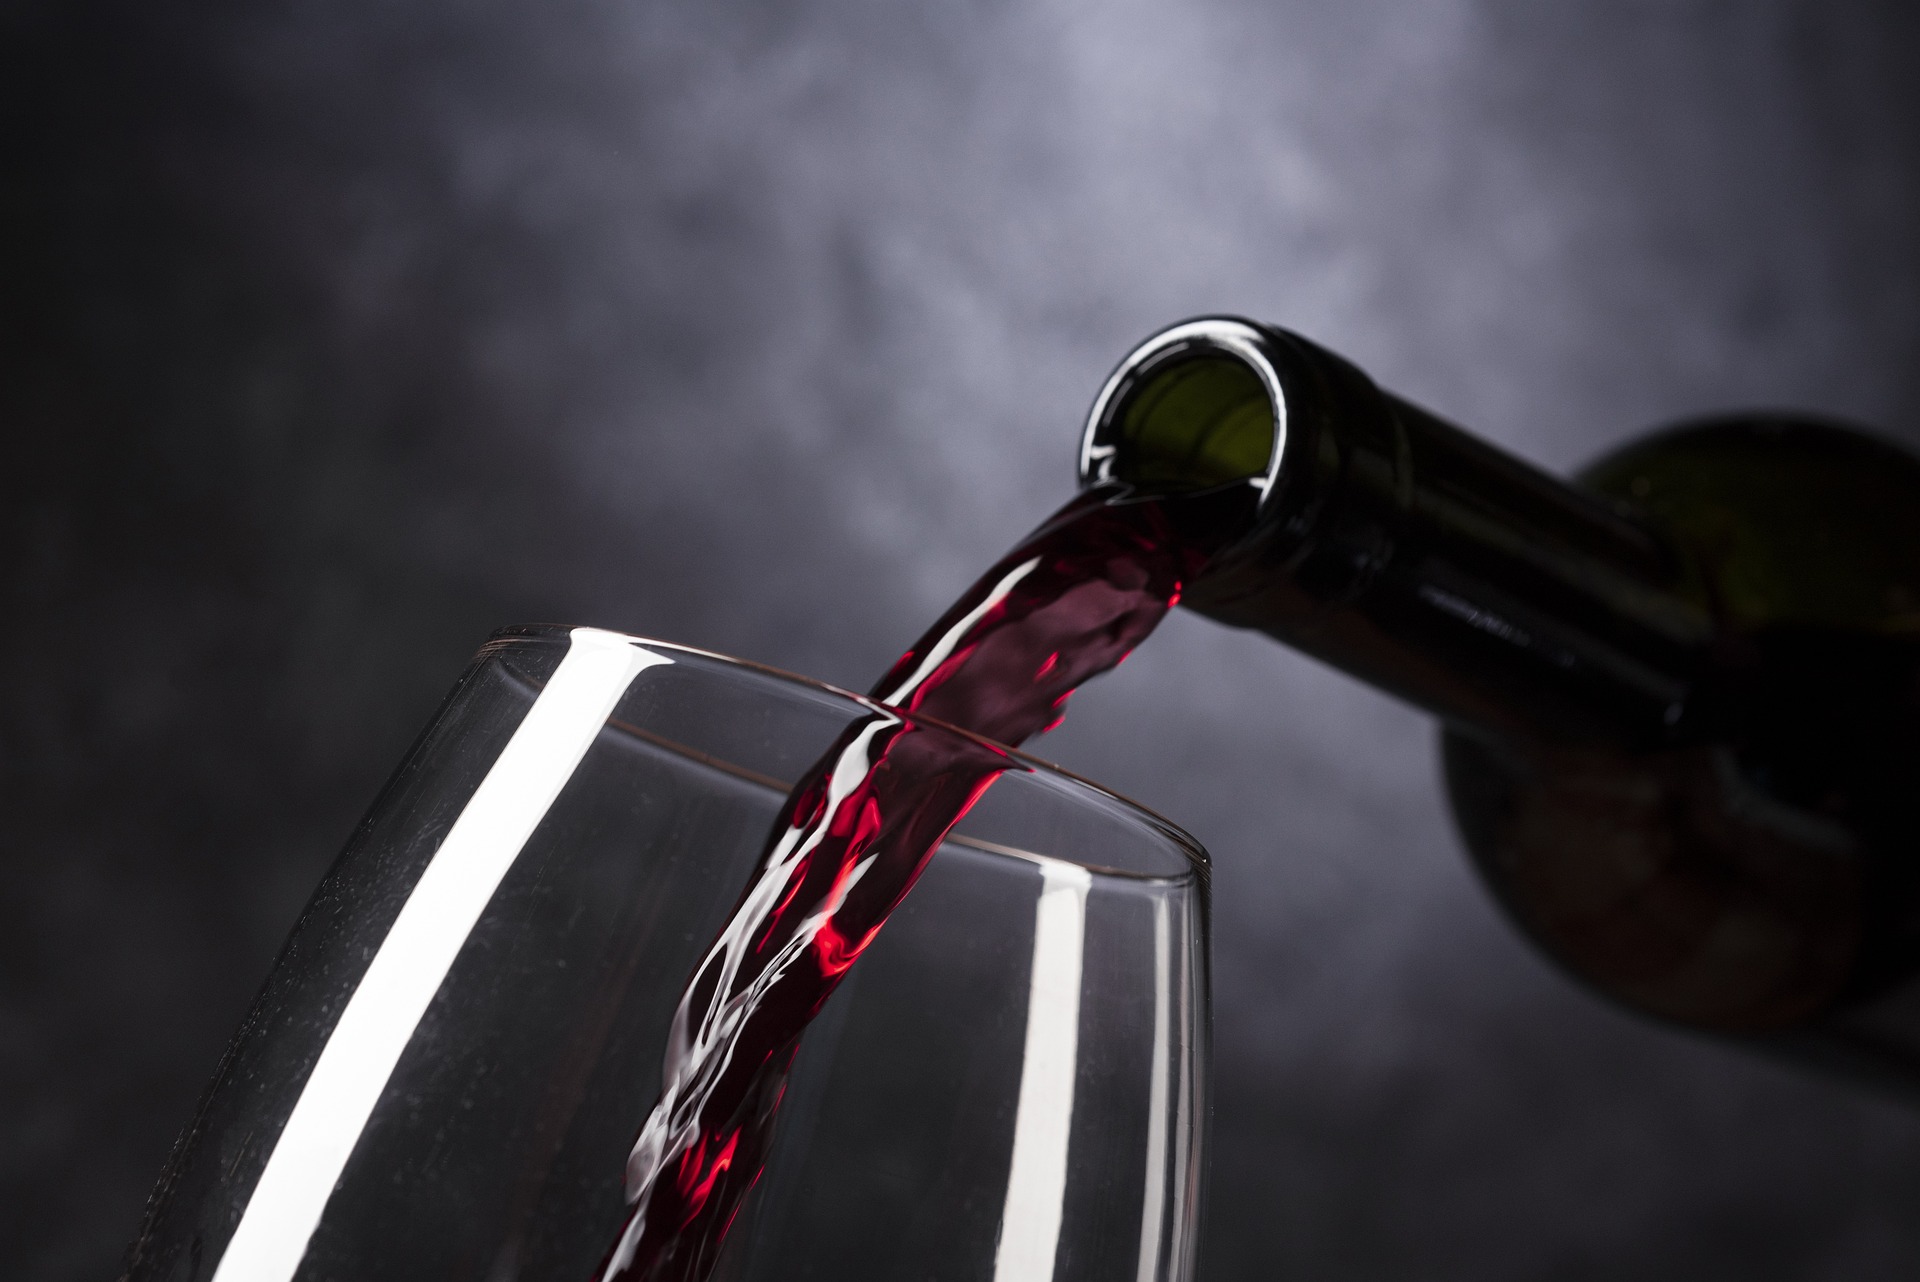 Sula Vineyards IPO: Company Raises Rs 288.10 crore Via Anchor Book